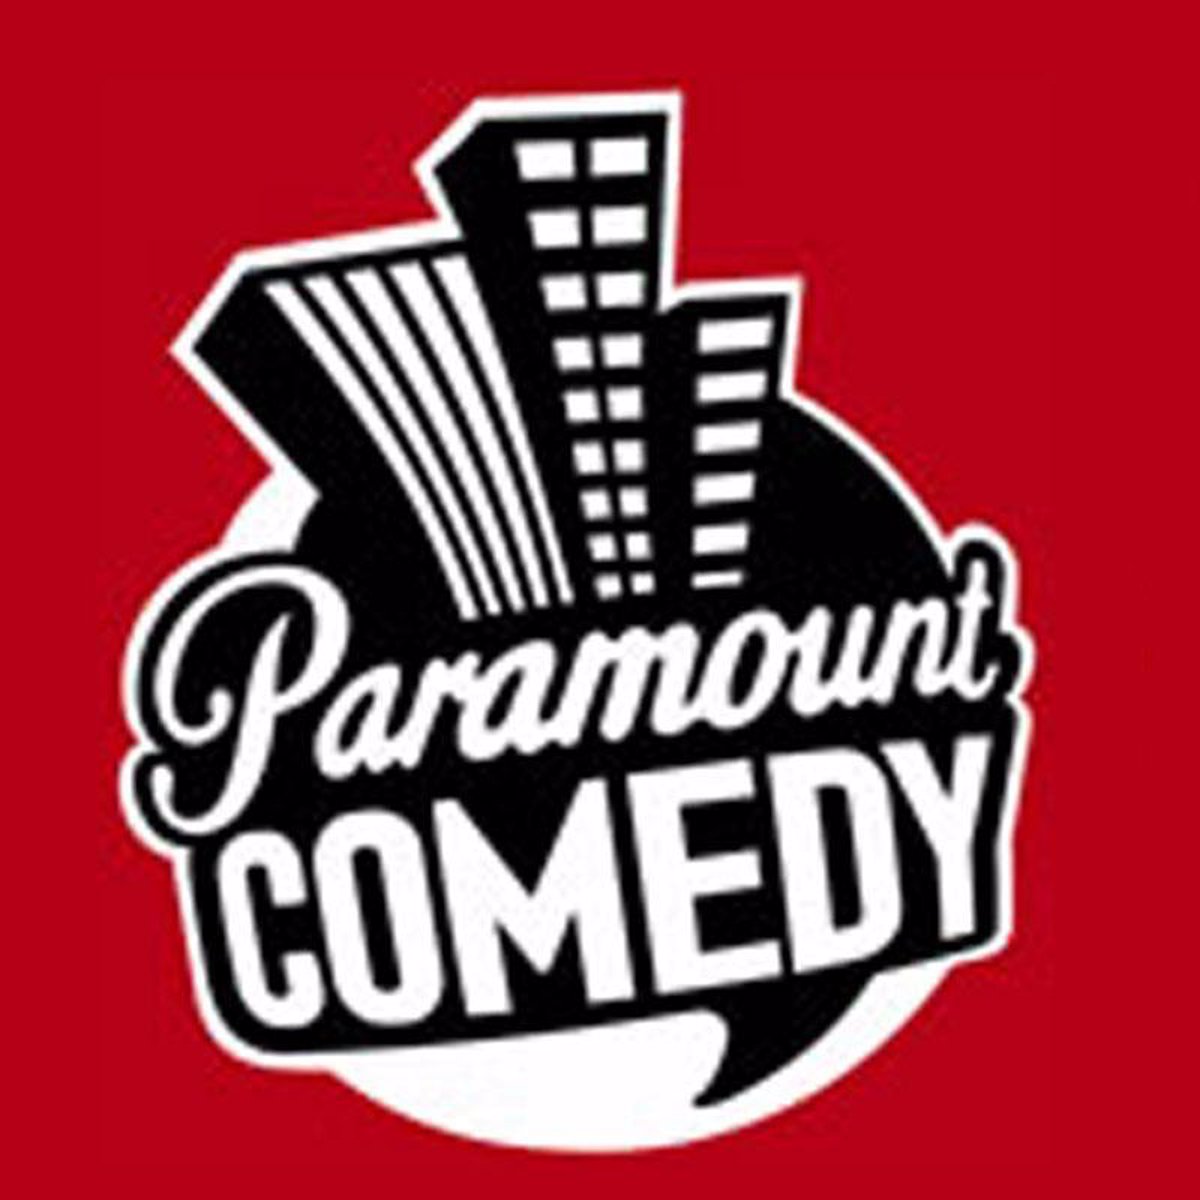 Парамаунт камеди. Телеканал Paramount comedy. Paramount comedy заставки. Paramount comedy Украина.